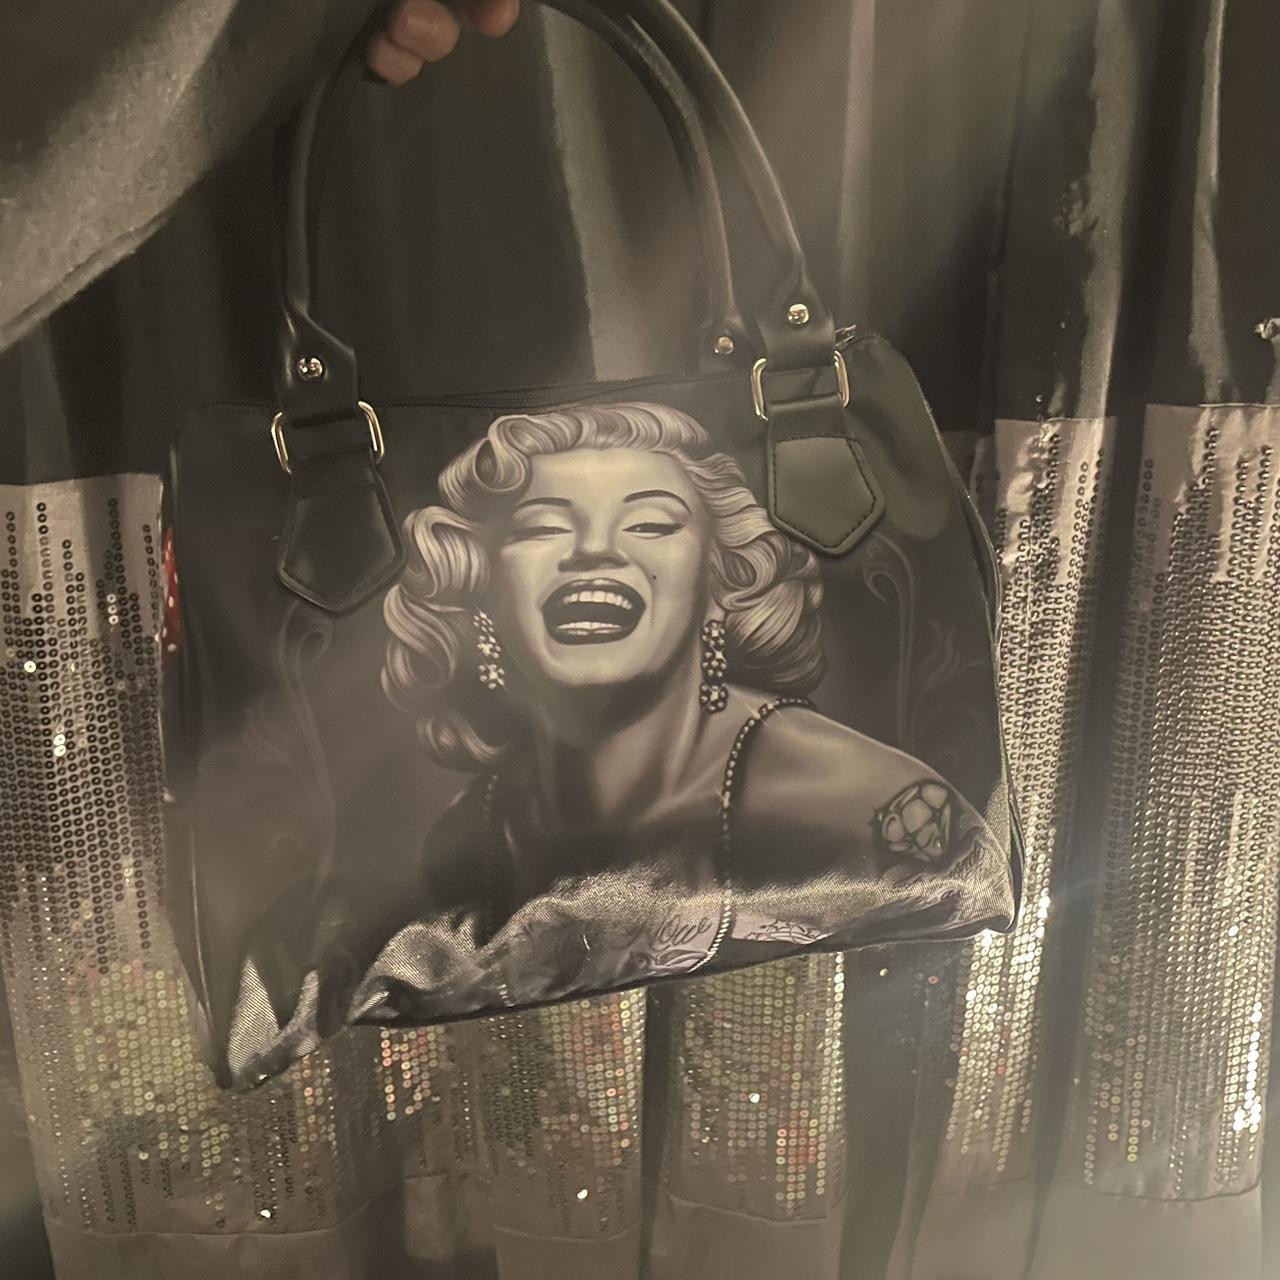 Marilyn Monroe, Bags, New Marilyn Monroe Purse